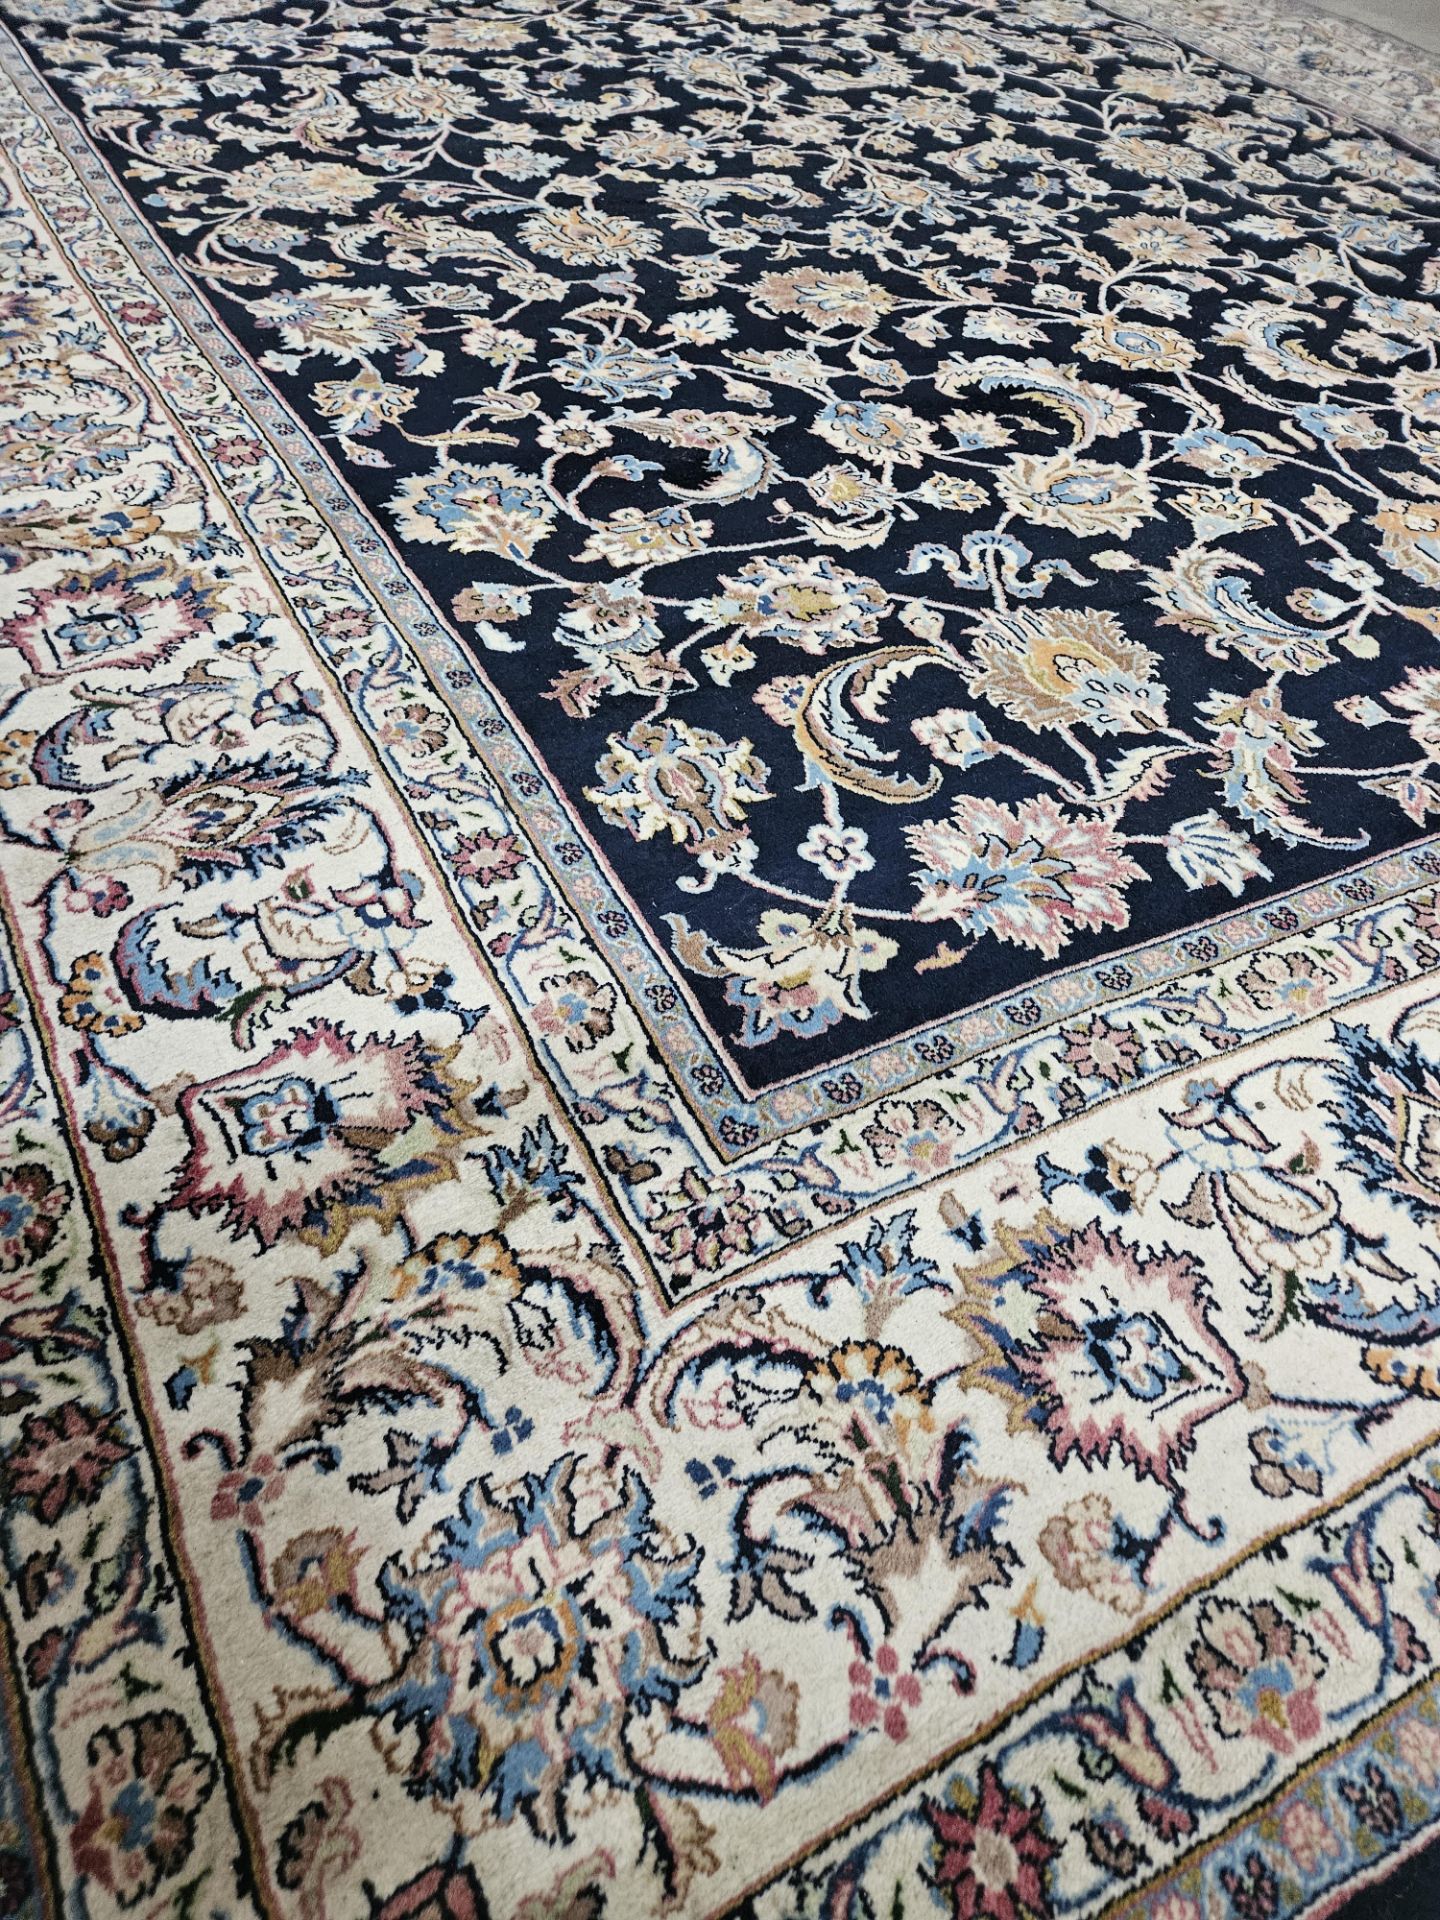 * Meshed Iranian rug - 3.15m x 2m